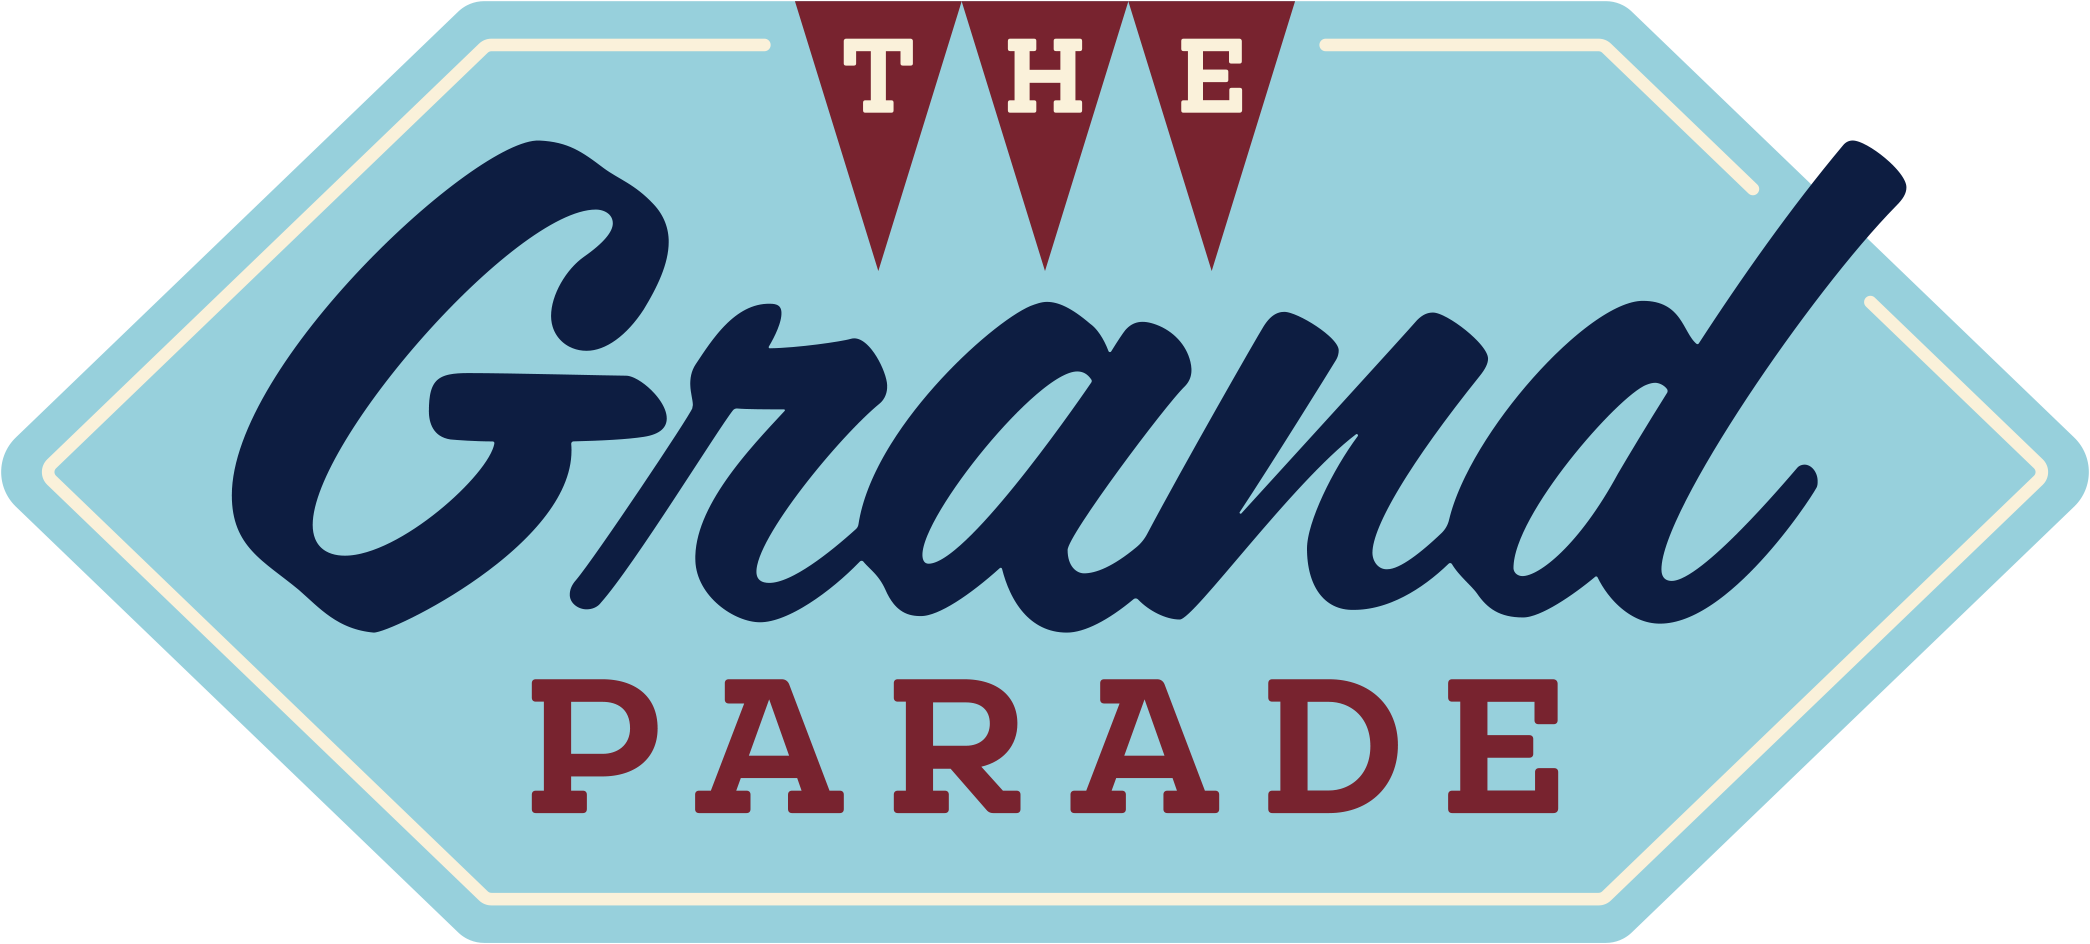 The Grand Parade Fundraiser Comox Valley